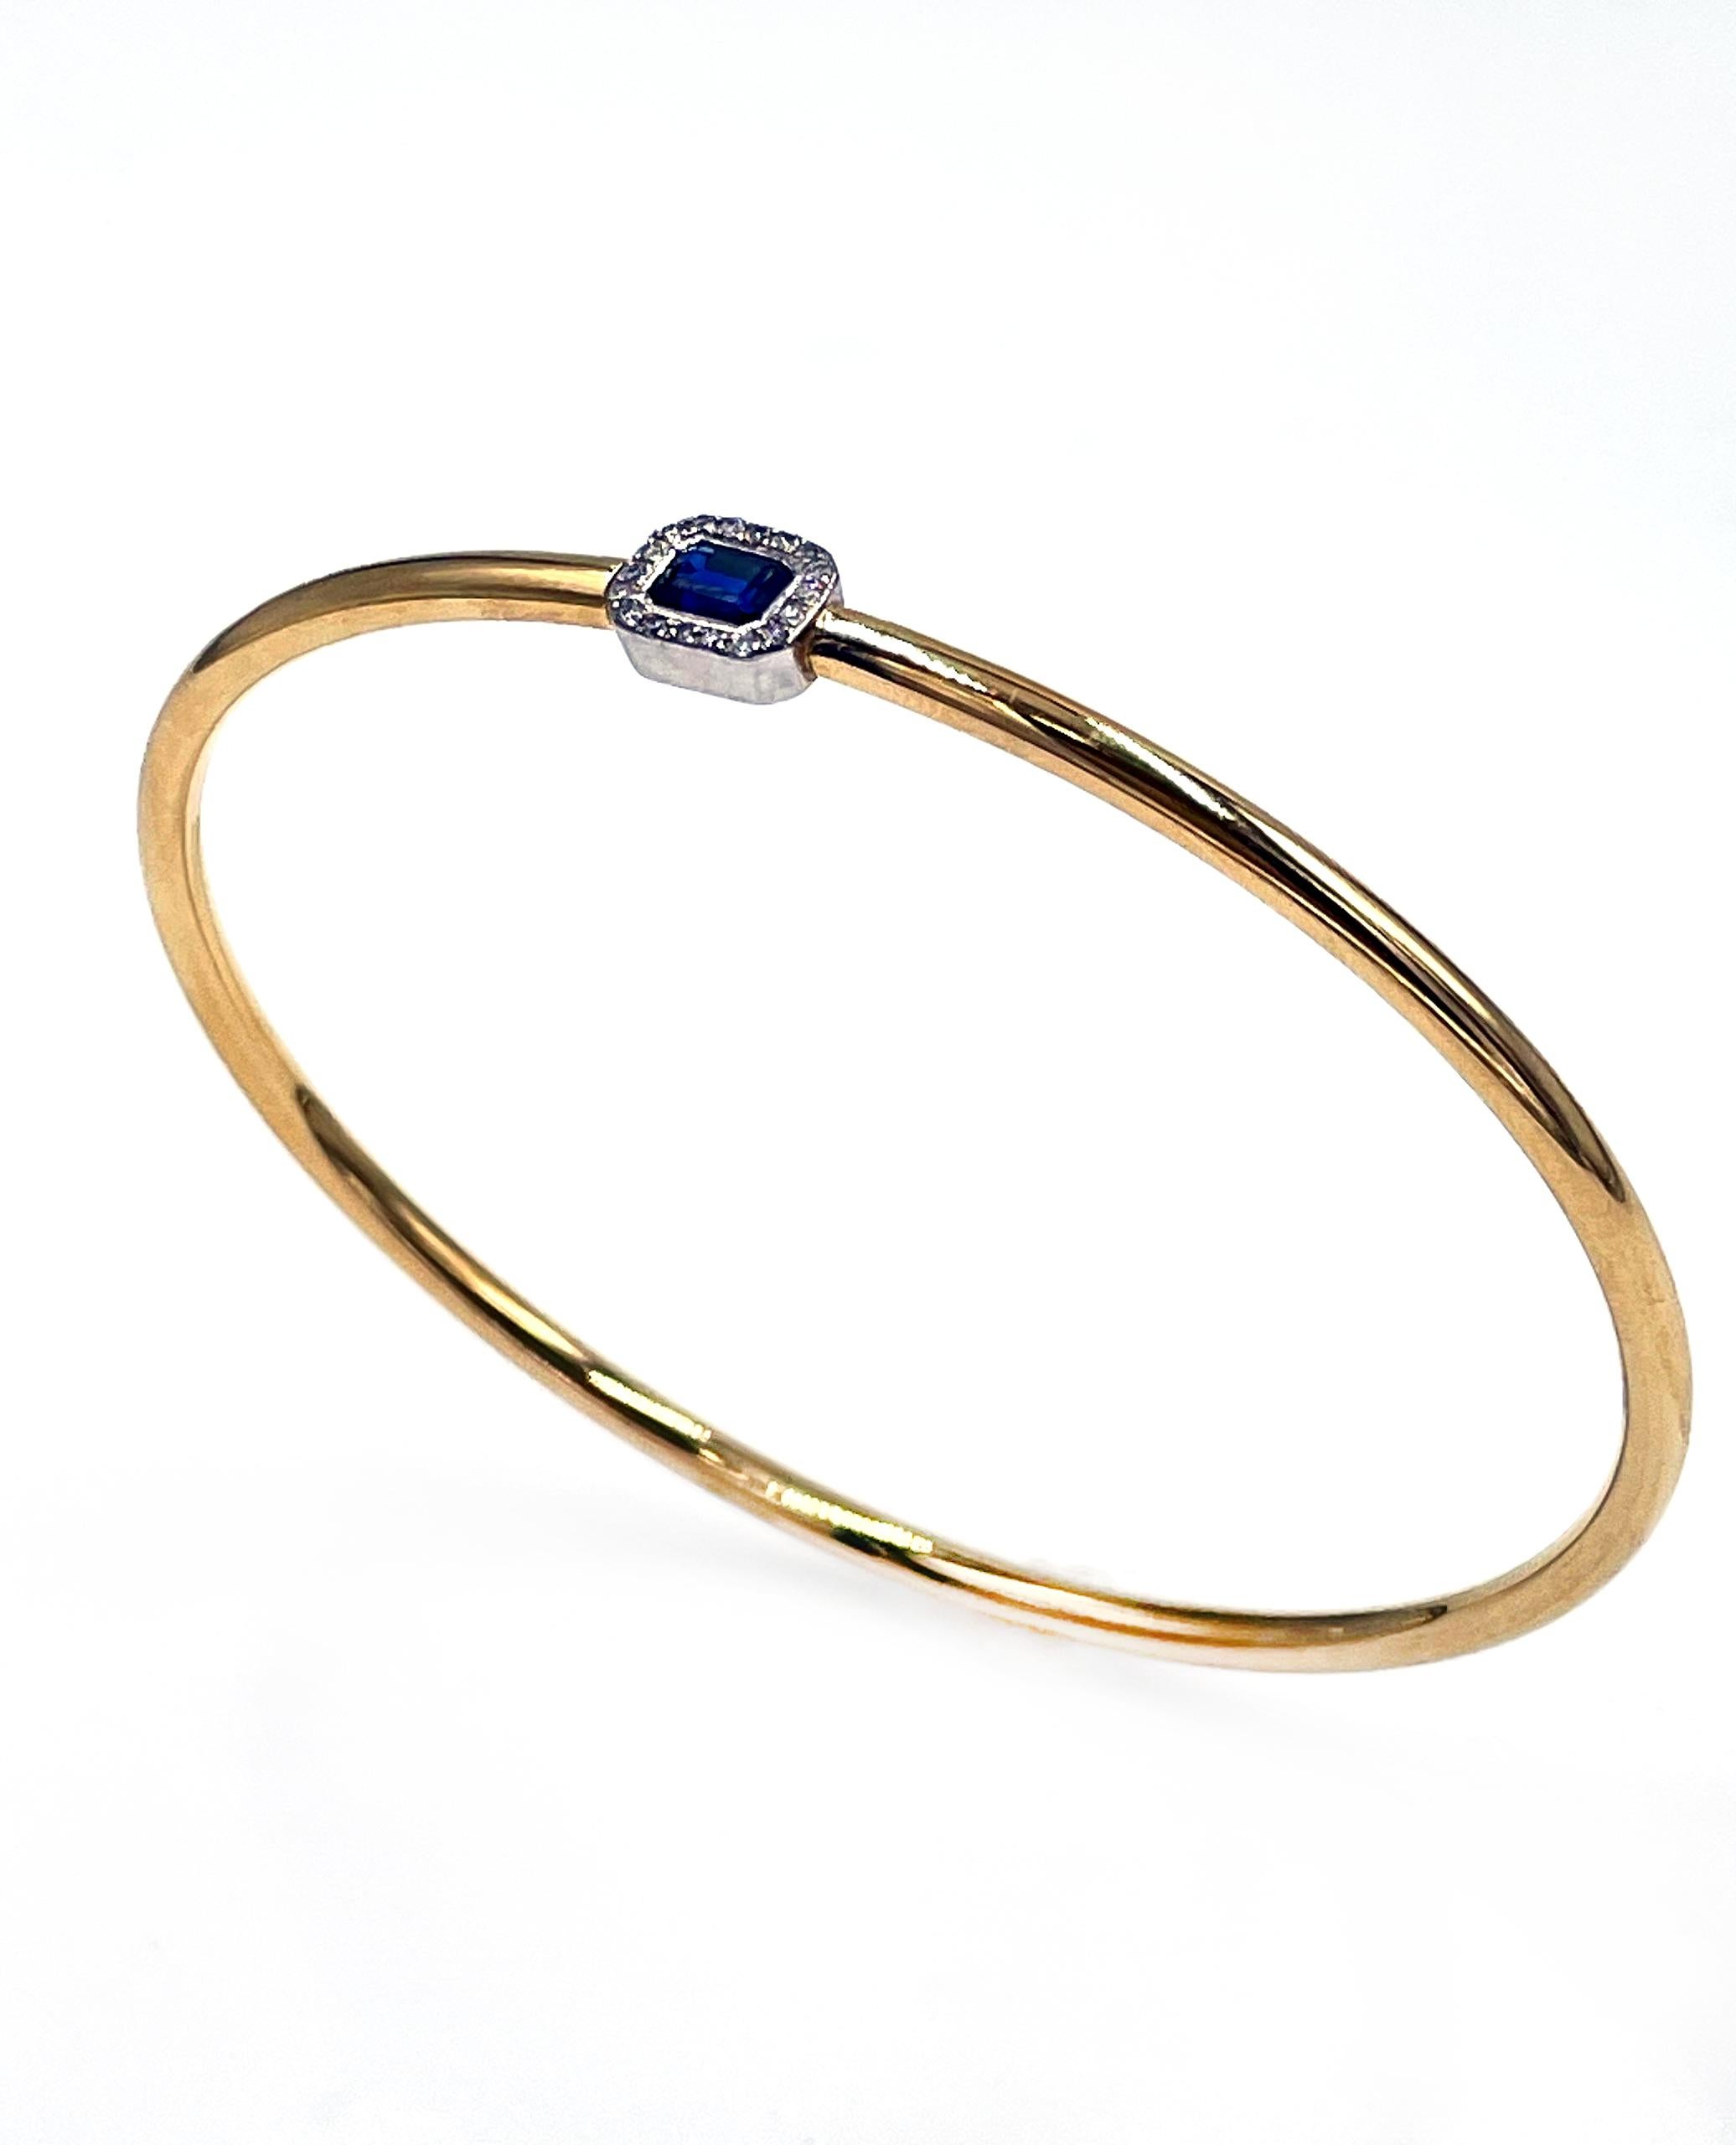 Contemporary Simon G. 18K Gold Bangle Bracelet with Diamonds and Sapphire - LB2494 For Sale